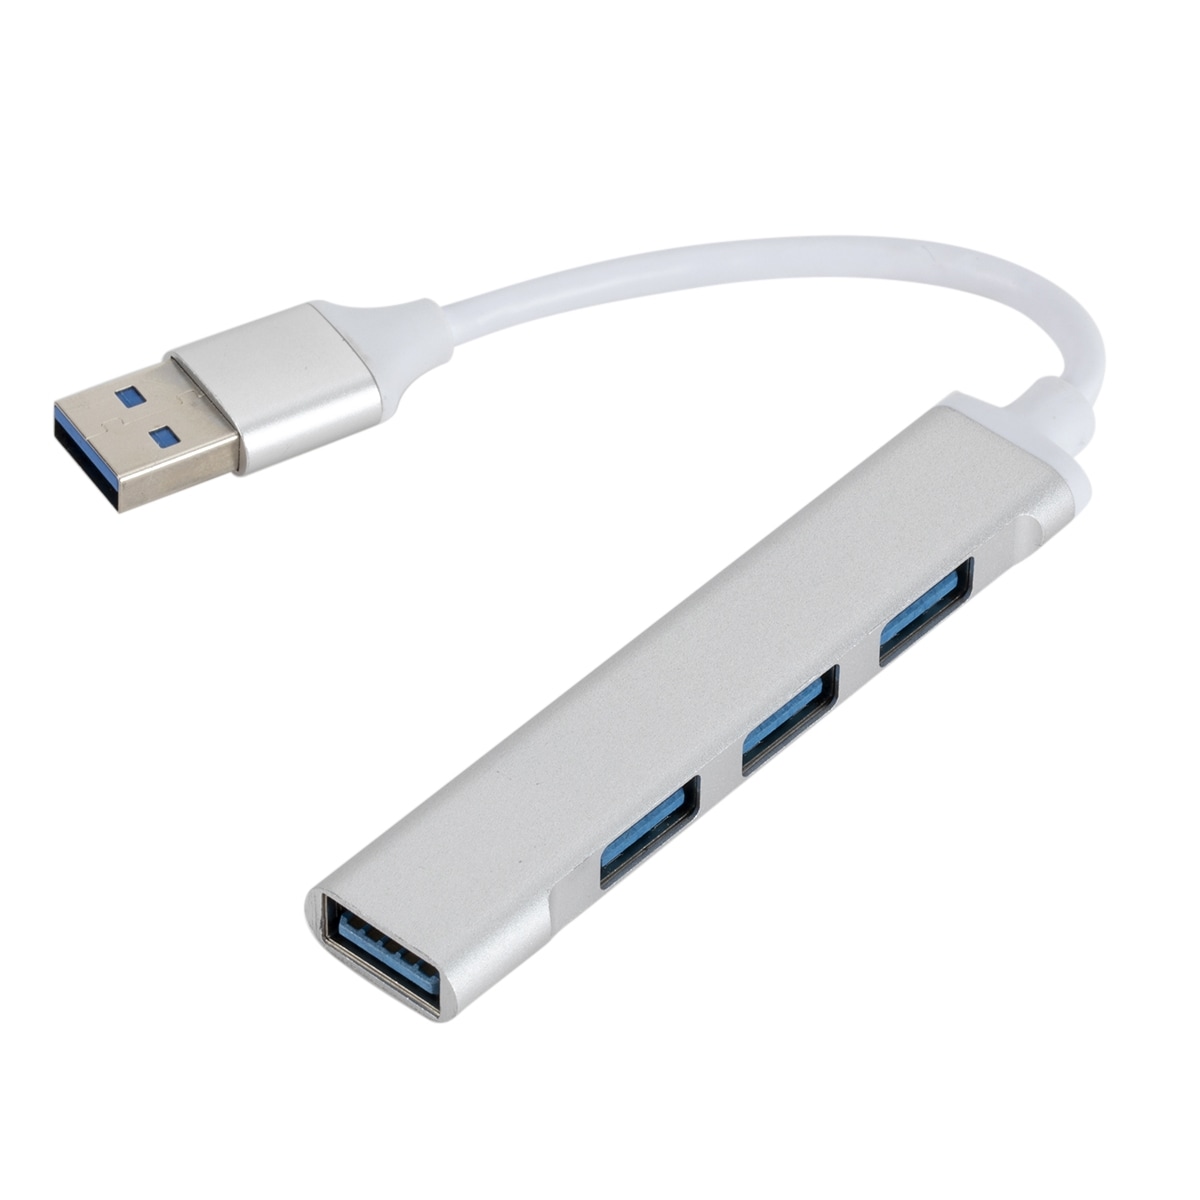 USB-Jakaja USB 3.0 - 1x USB 2.0 & 3x USB 3.0